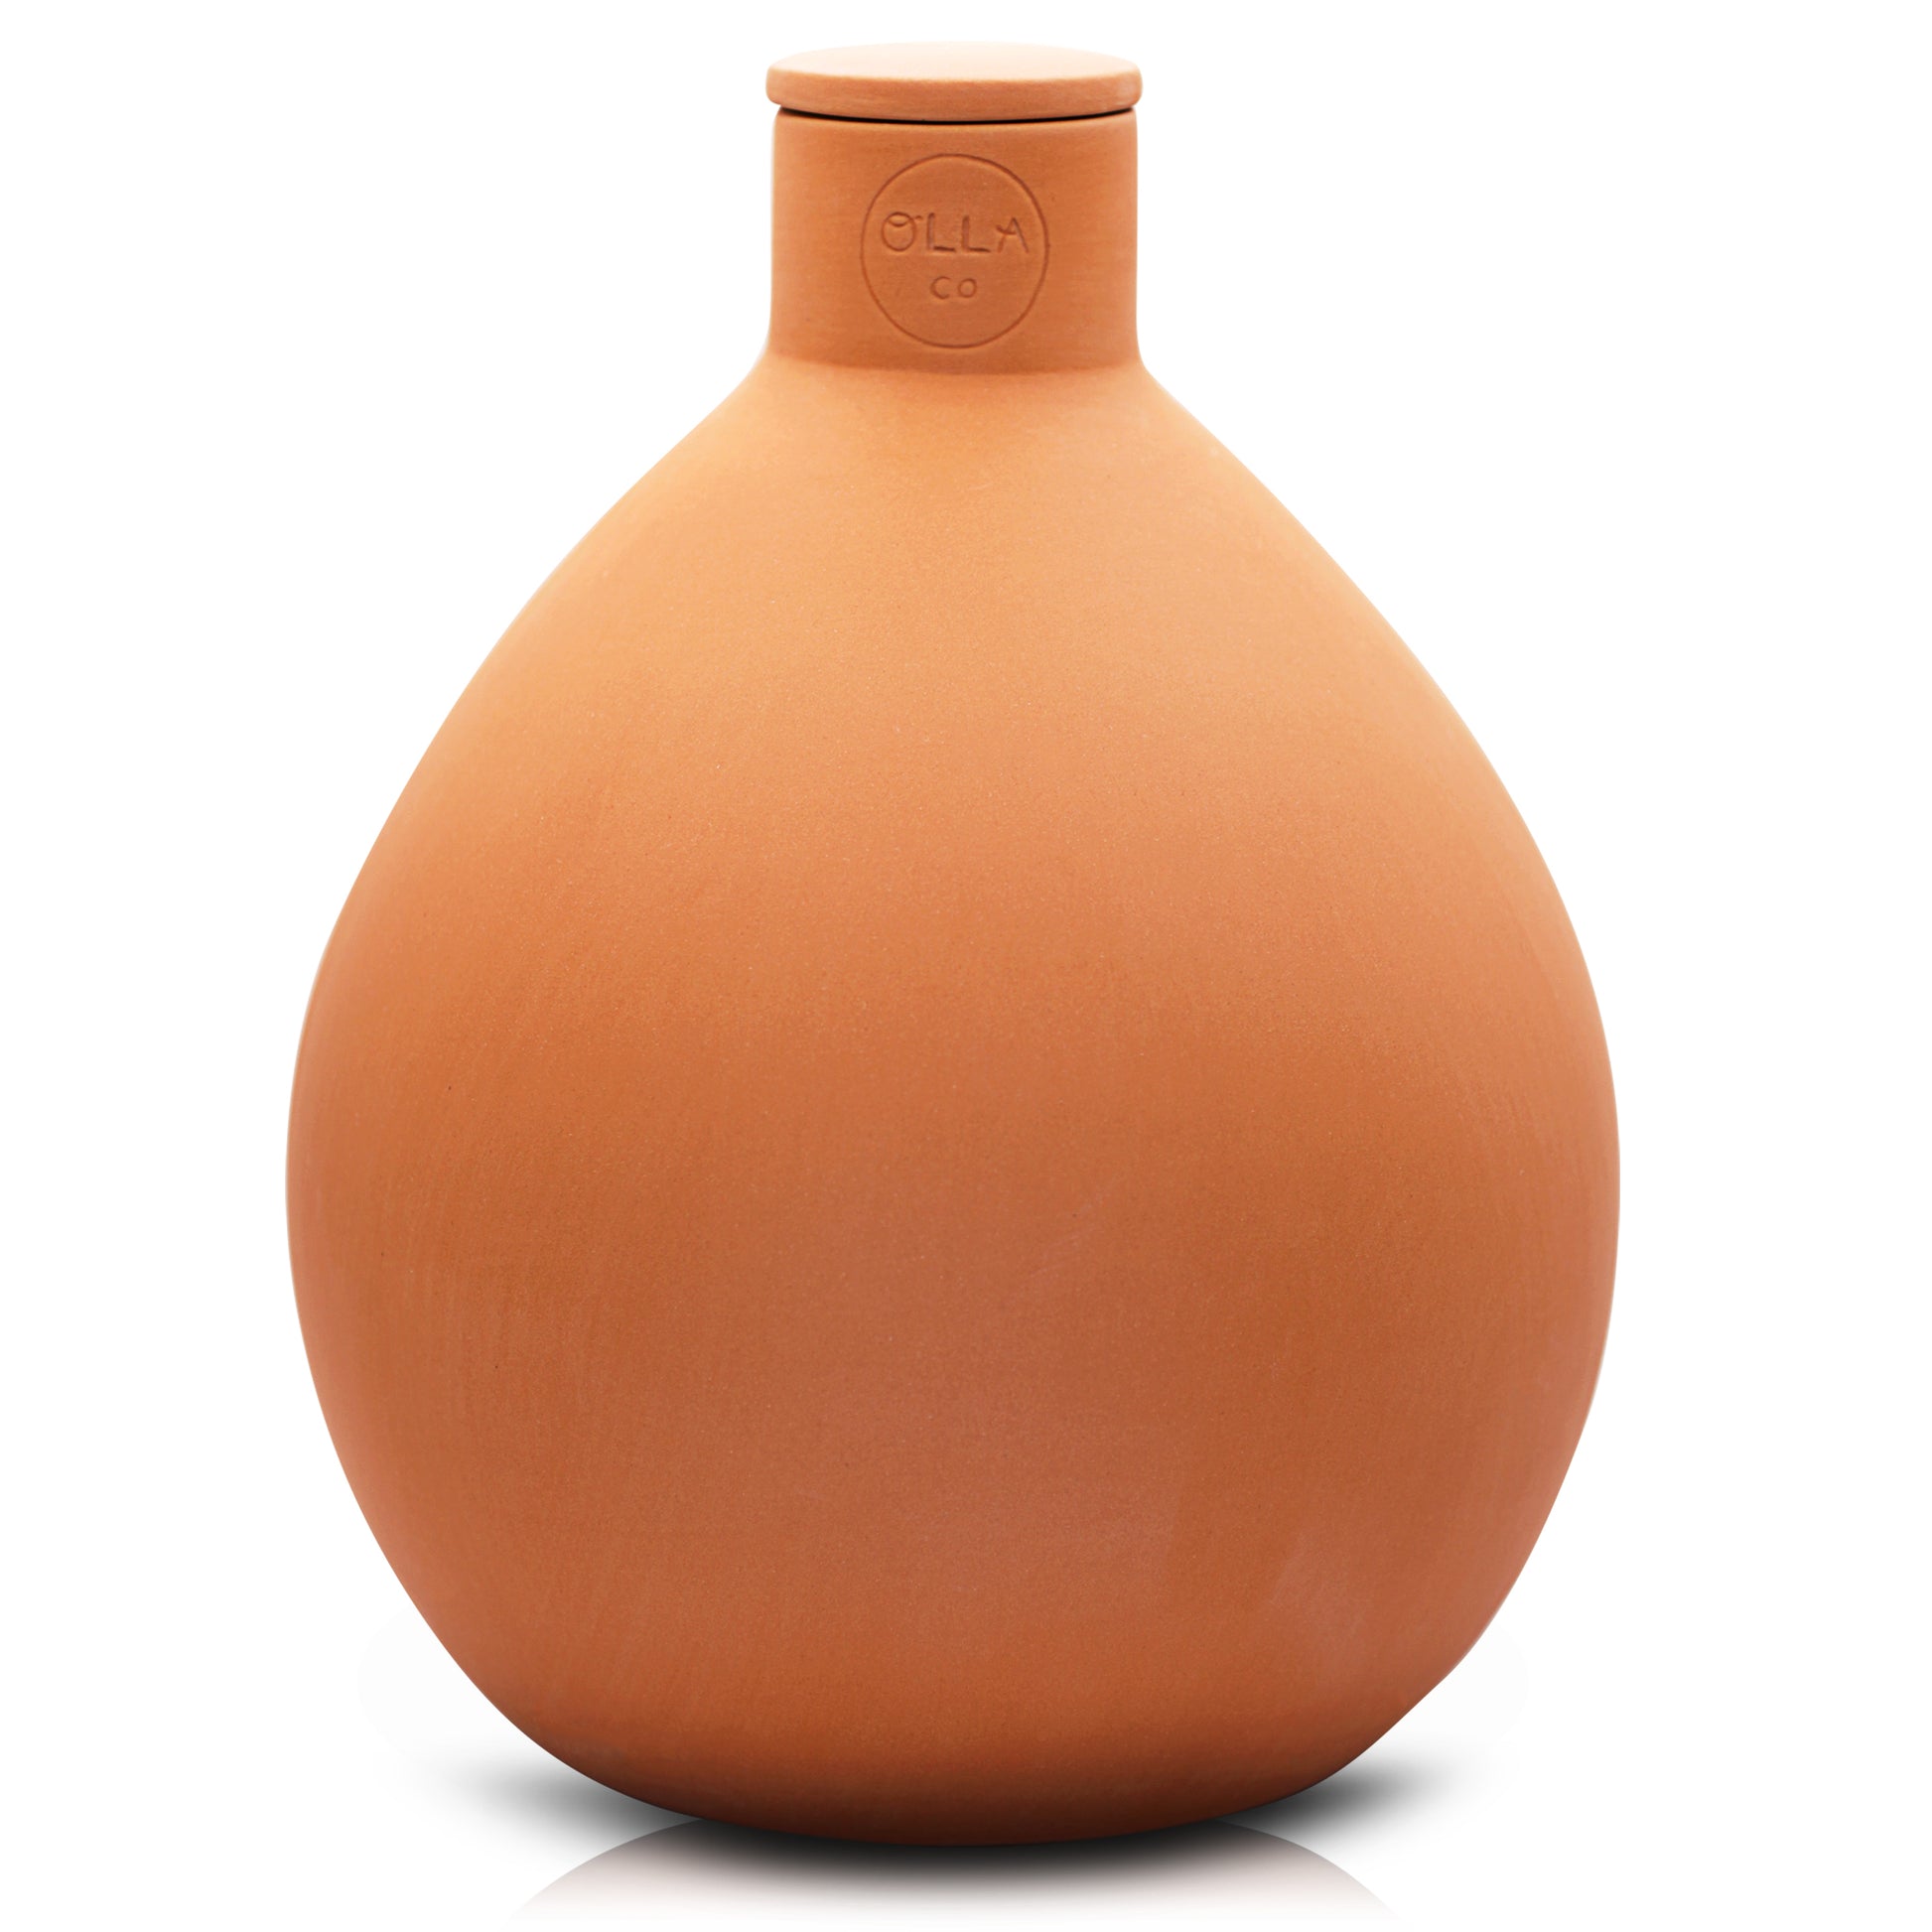 Olla Watering Pot – The Olla Company